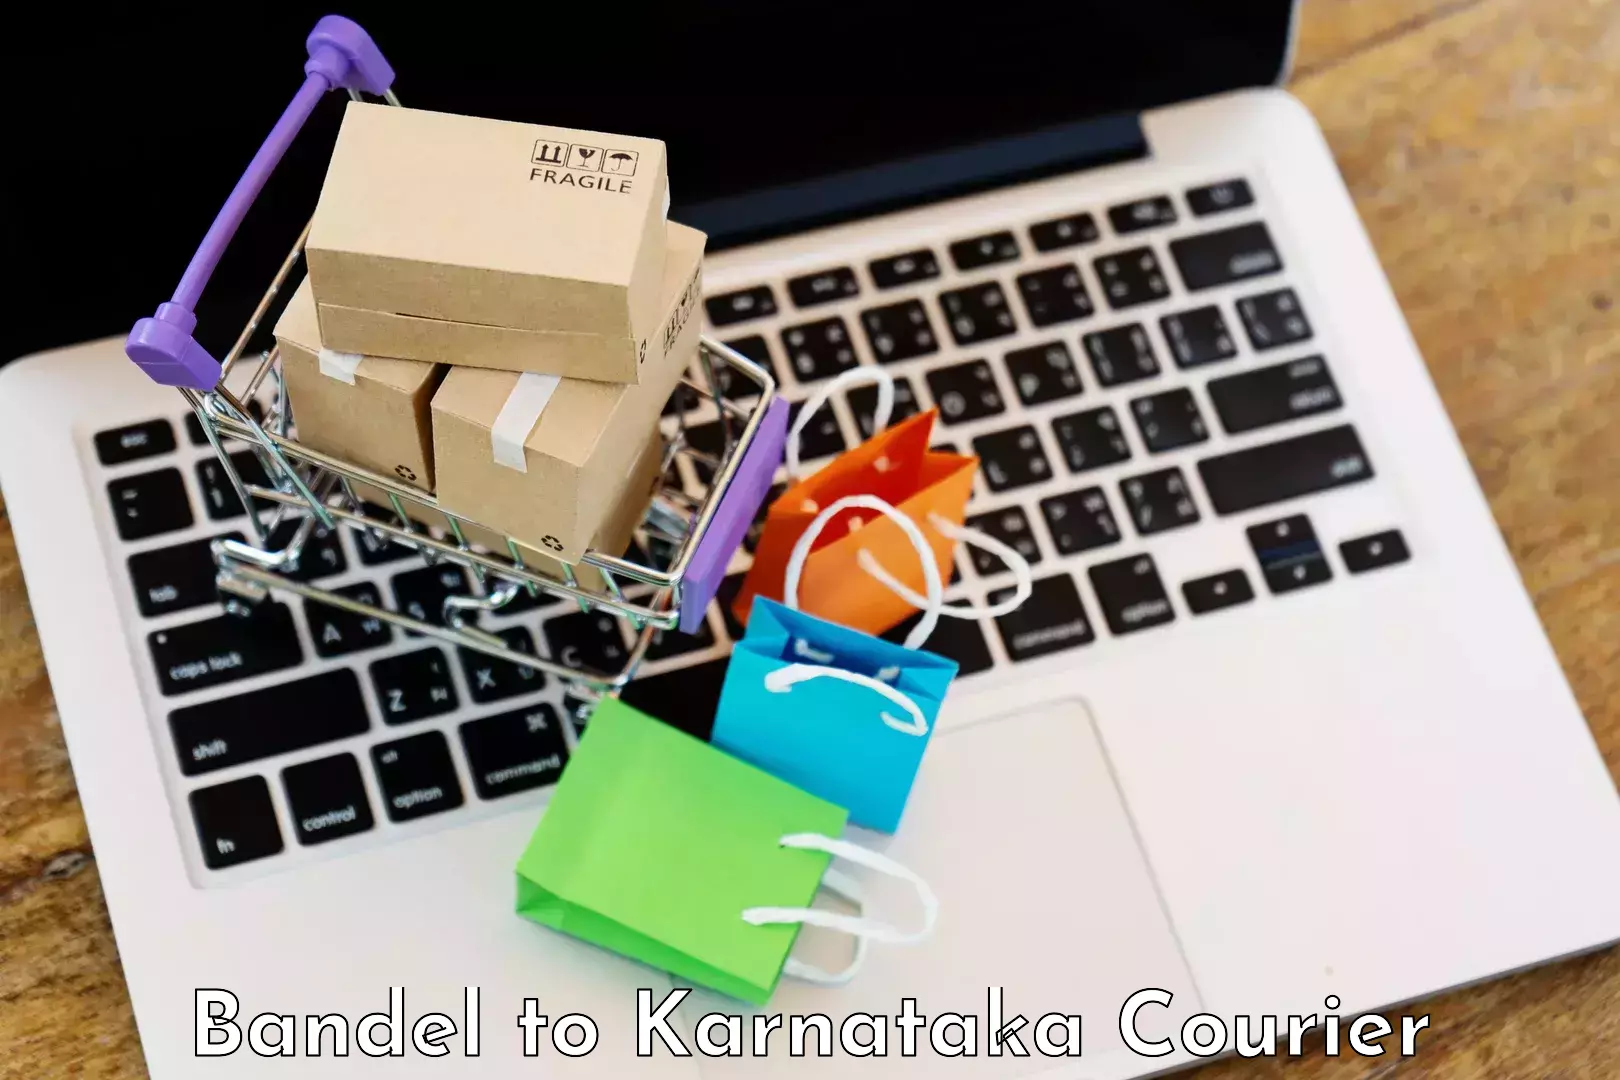 Professional moving company Bandel to Karnataka